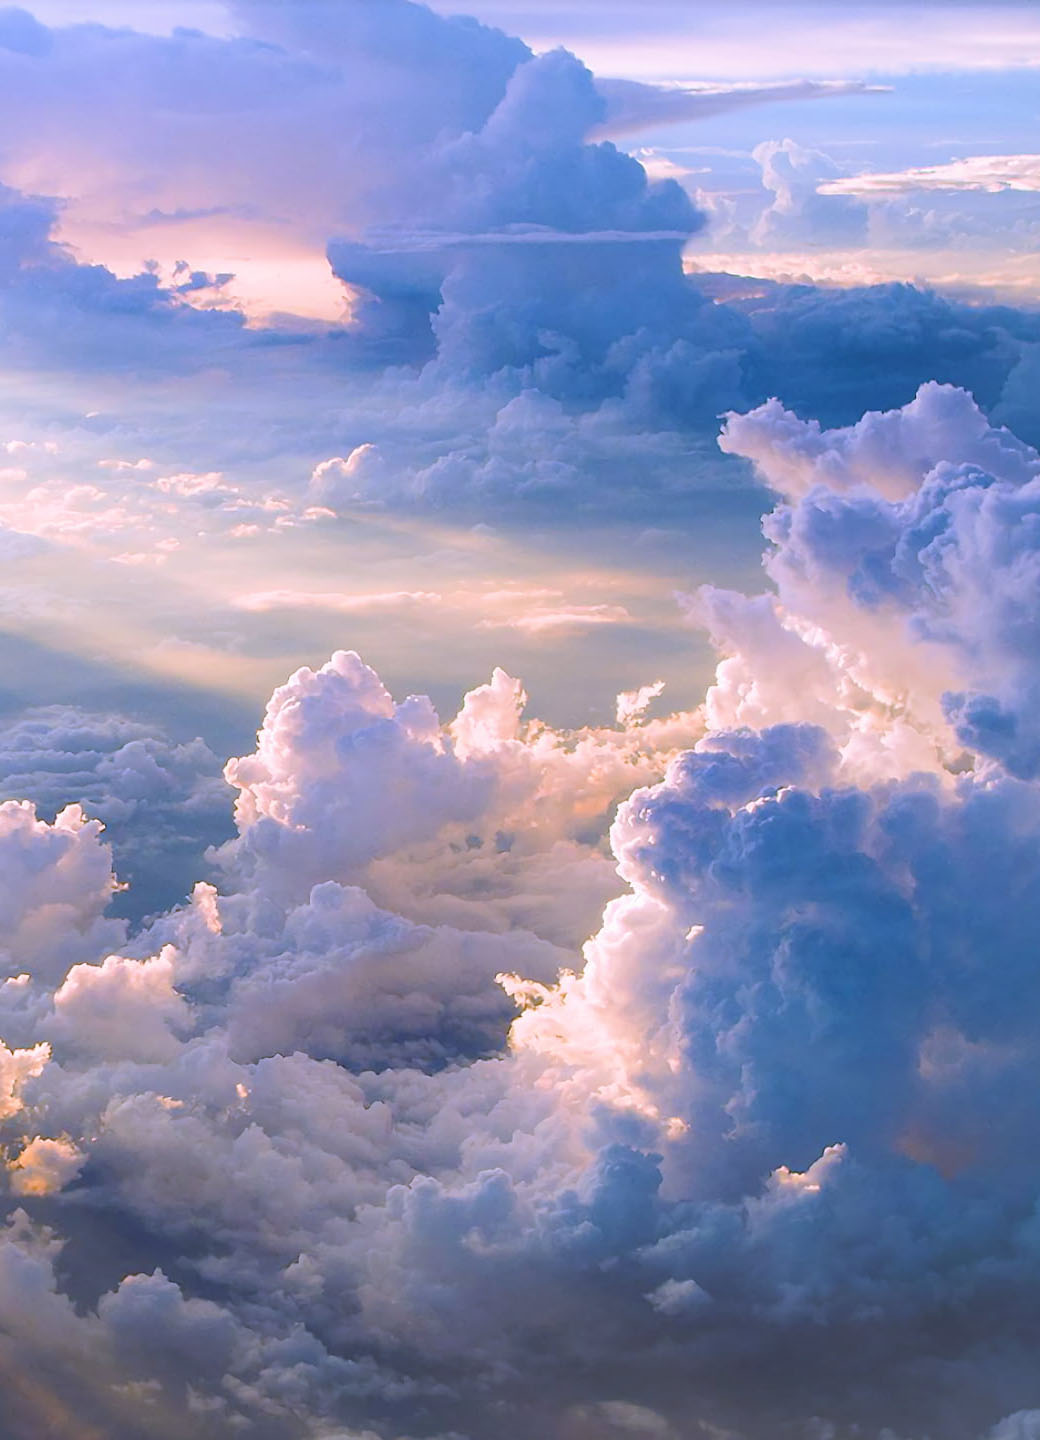 Hình nền mây trên bầu trời đẹp lạ kì hinhnen hinhanh anhdep  hinhnendienthoa  Fondos de pantalla cielo Iphone fondos de pantalla  Fondos de pantalla estéticos